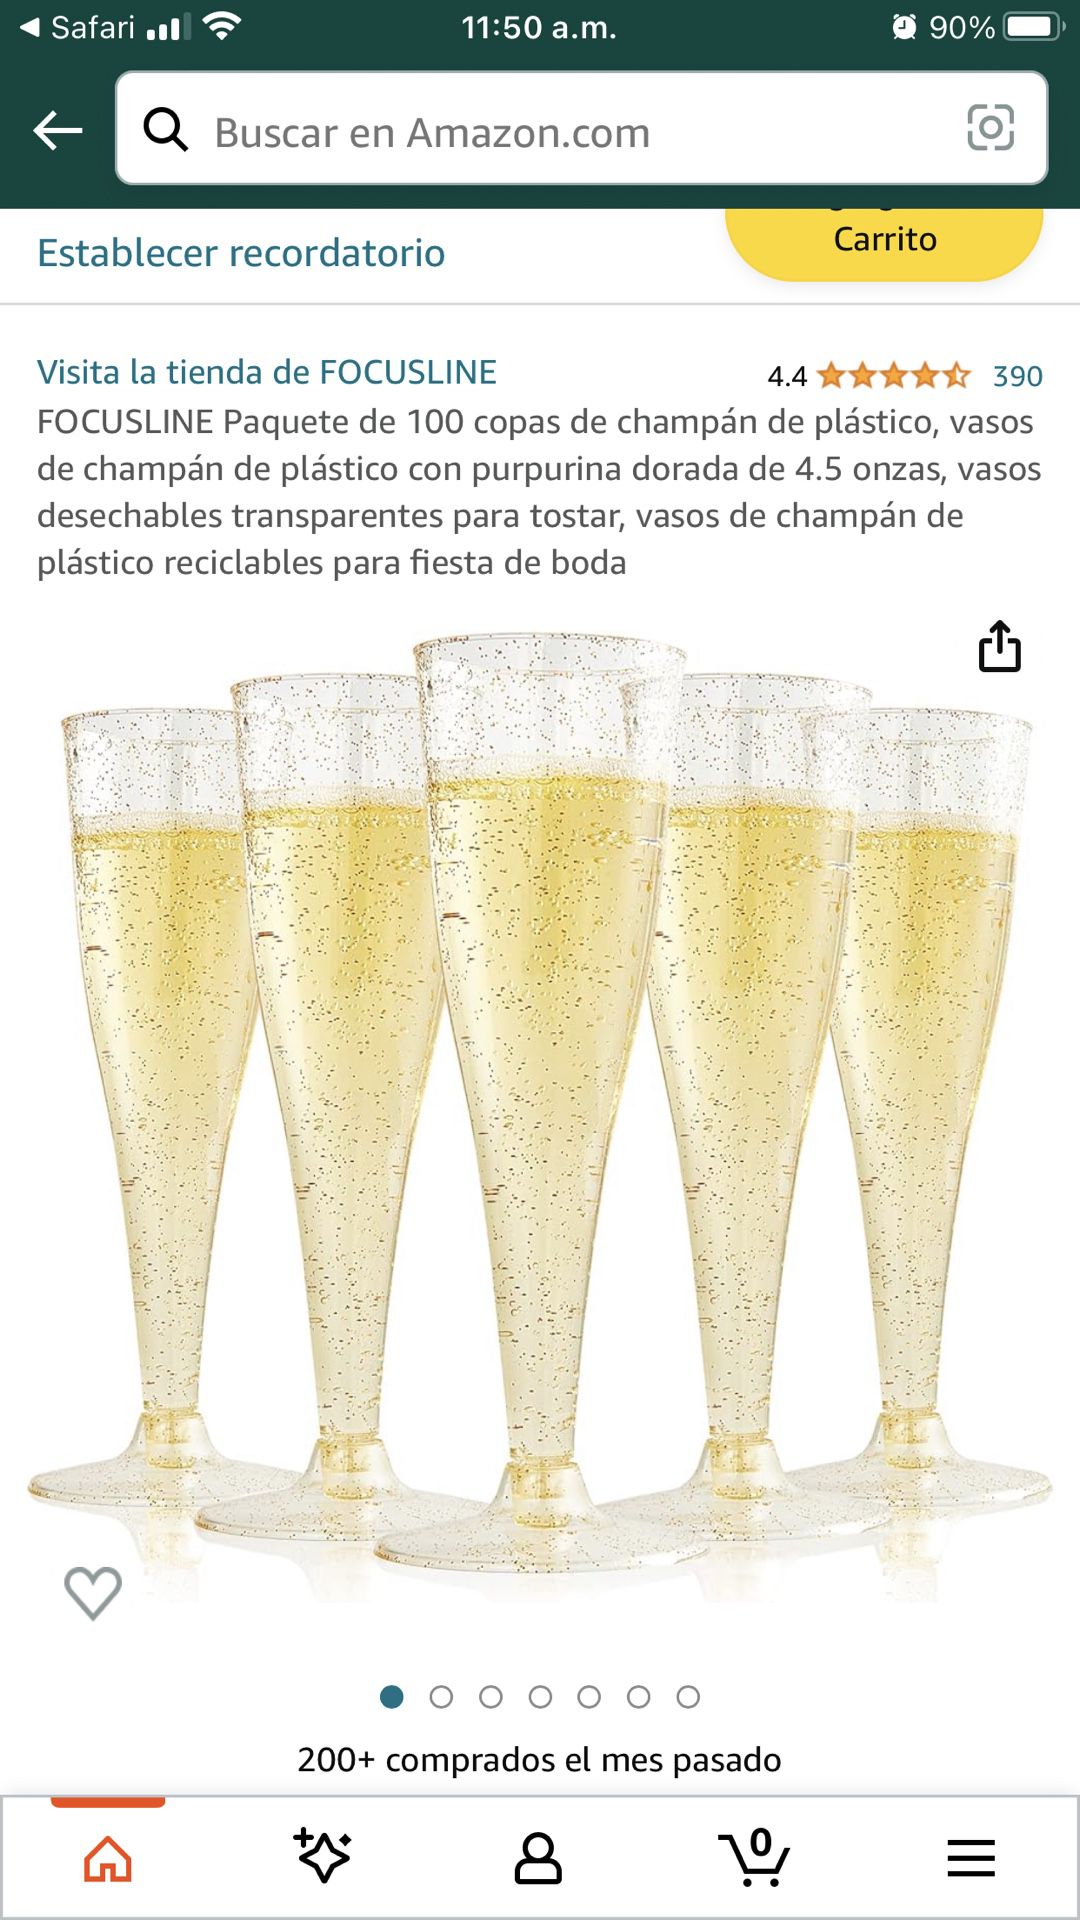 Heavy Duty Plastic Champagne Flutes4.5oz